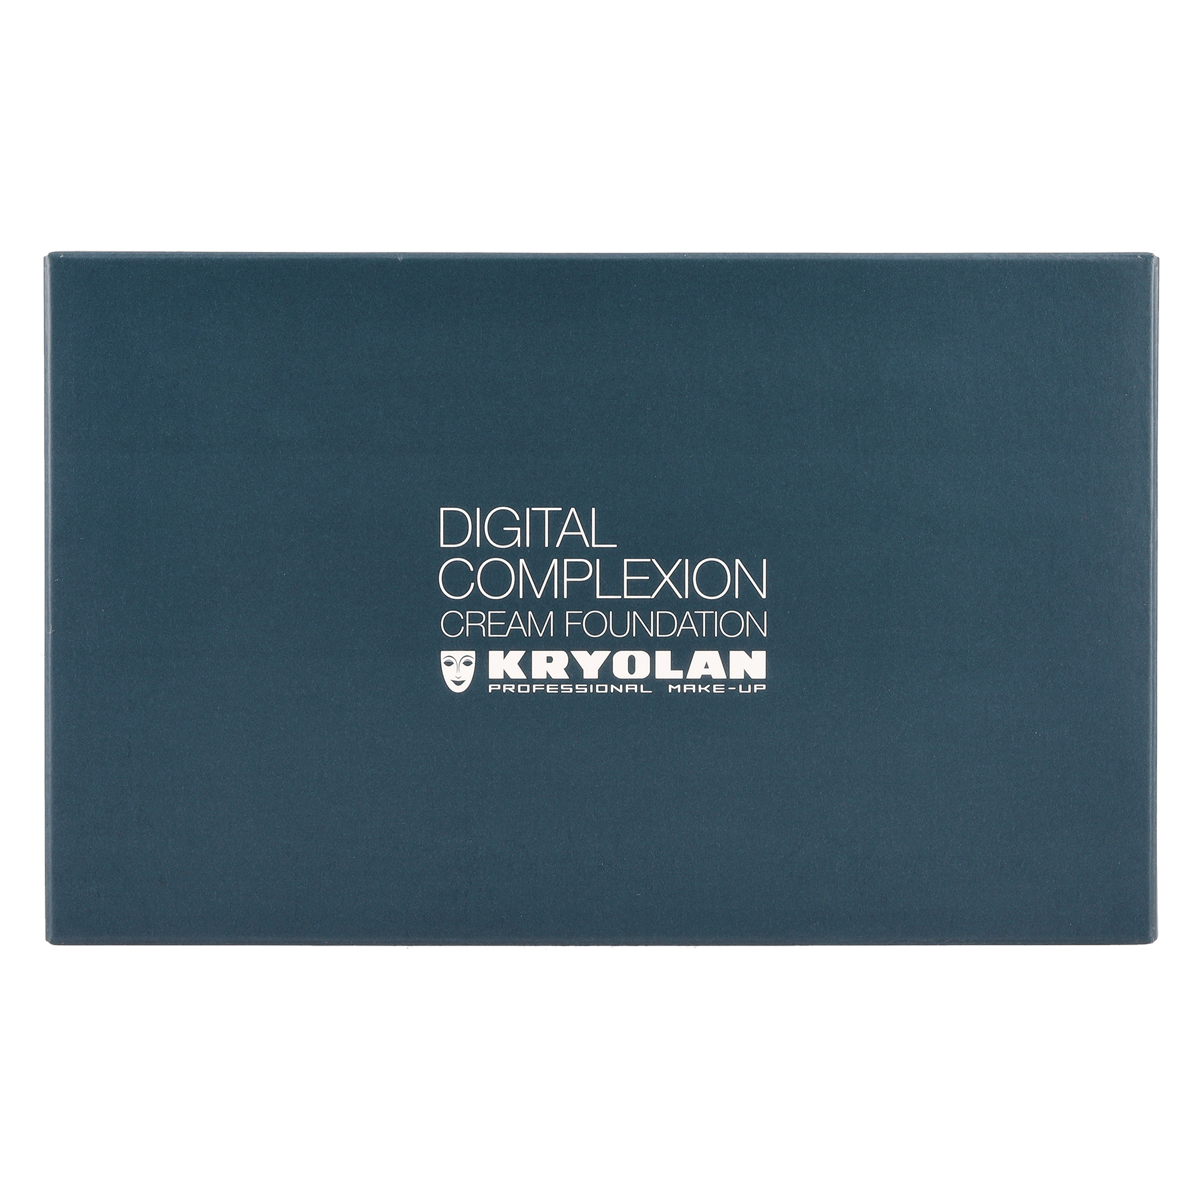 Digital 3 Complexion Cream Foundation